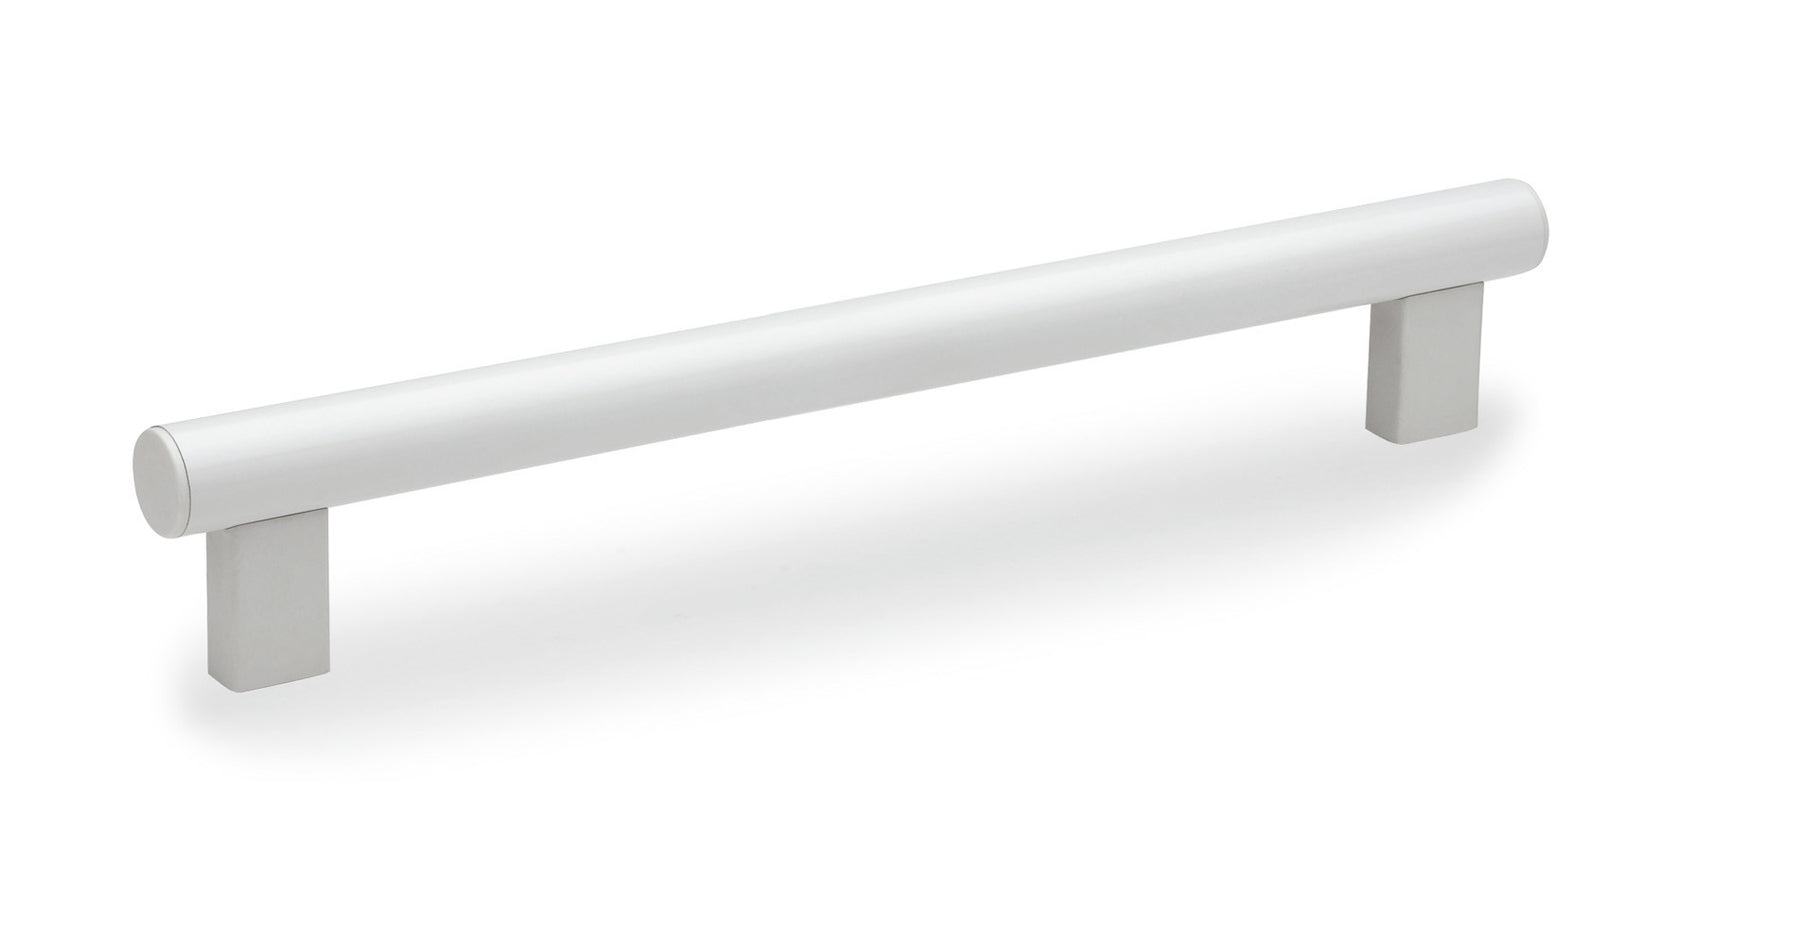 151516 M.1066 BM/30-400 CLEAN Elesa Clean Series Aluminum Tubular Handle with White Epoxy Coating Threaded M8